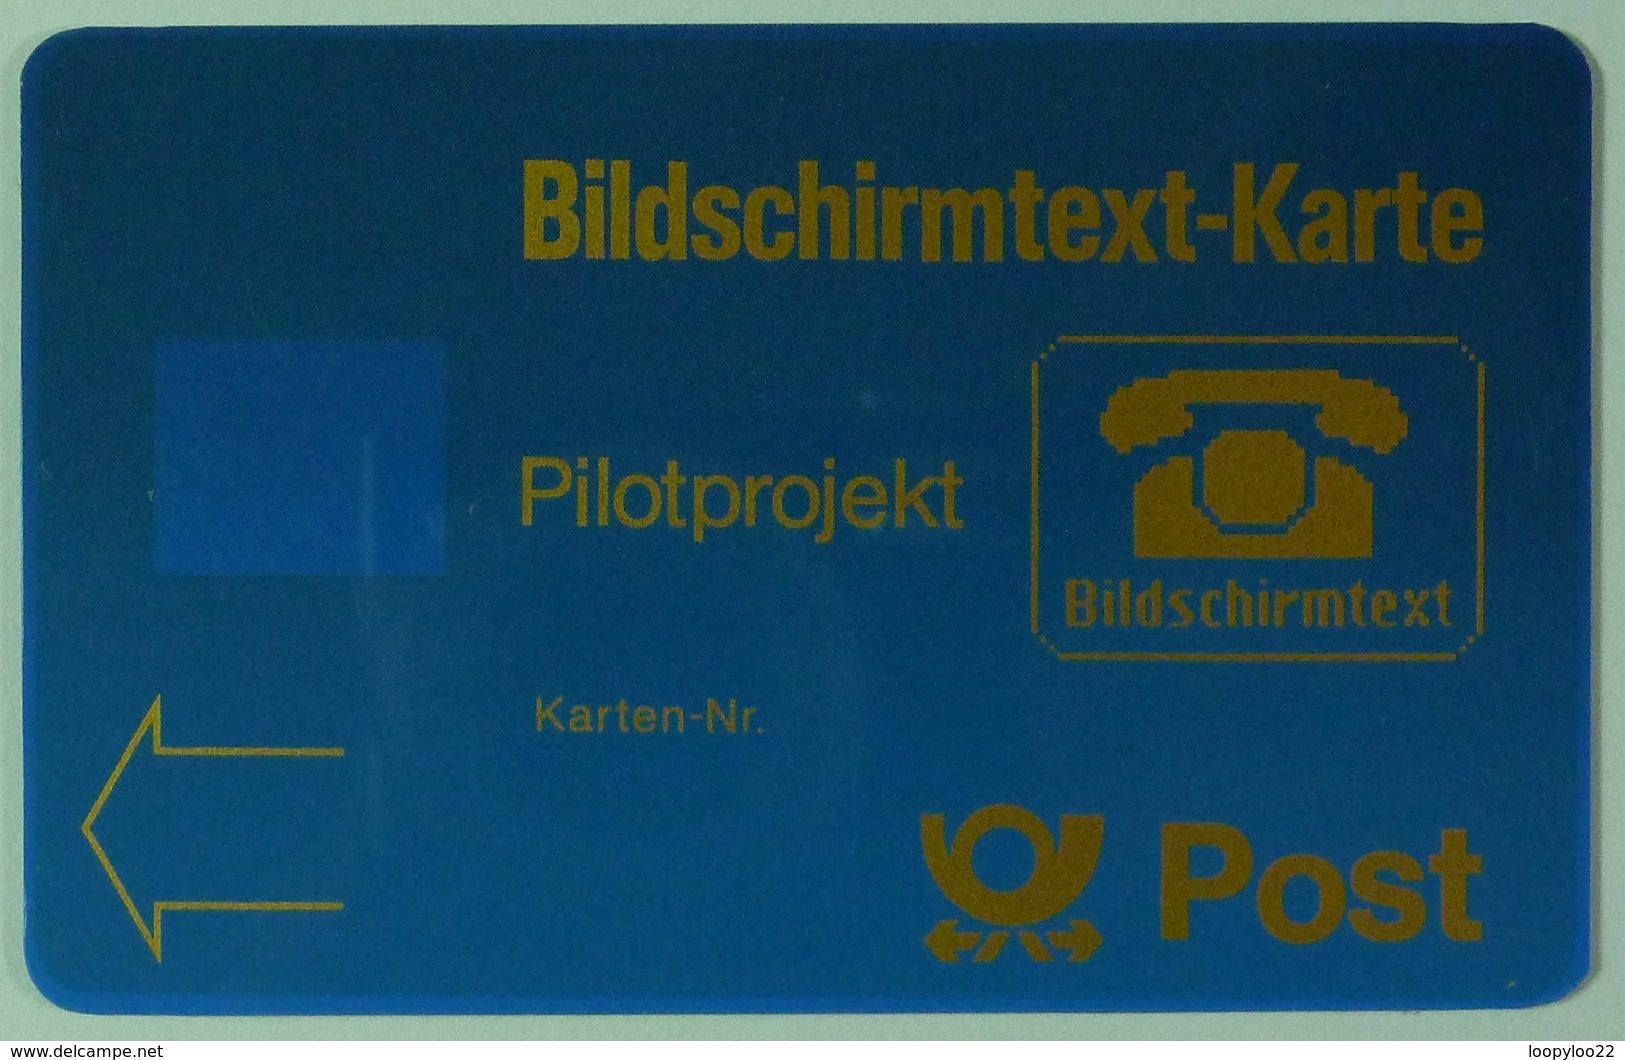 GERMANY - Bildschirmtext-Karte - Pilotprojekt - Specimen - Without Chip Or Control - RR - T-Series: Testkarten